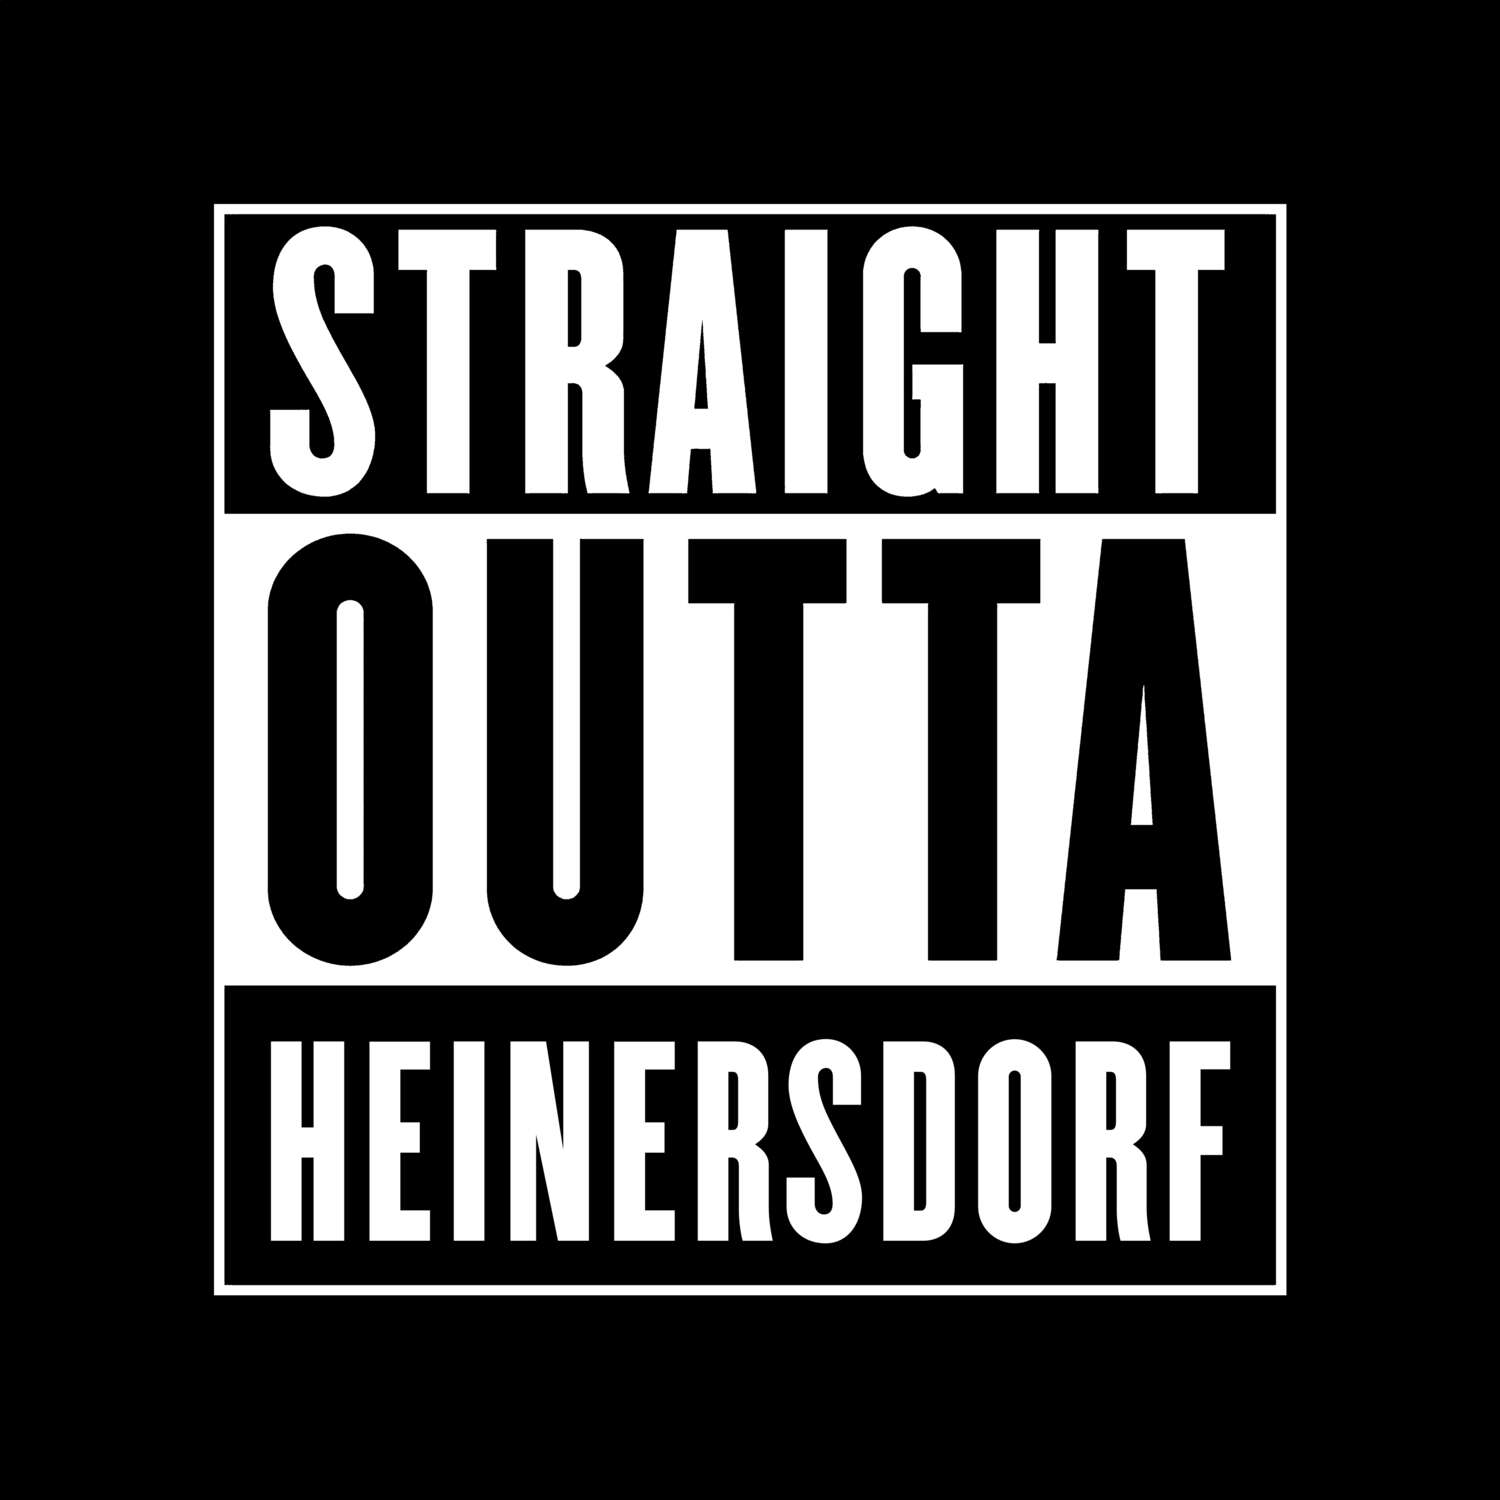 Heinersdorf T-Shirt »Straight Outta«